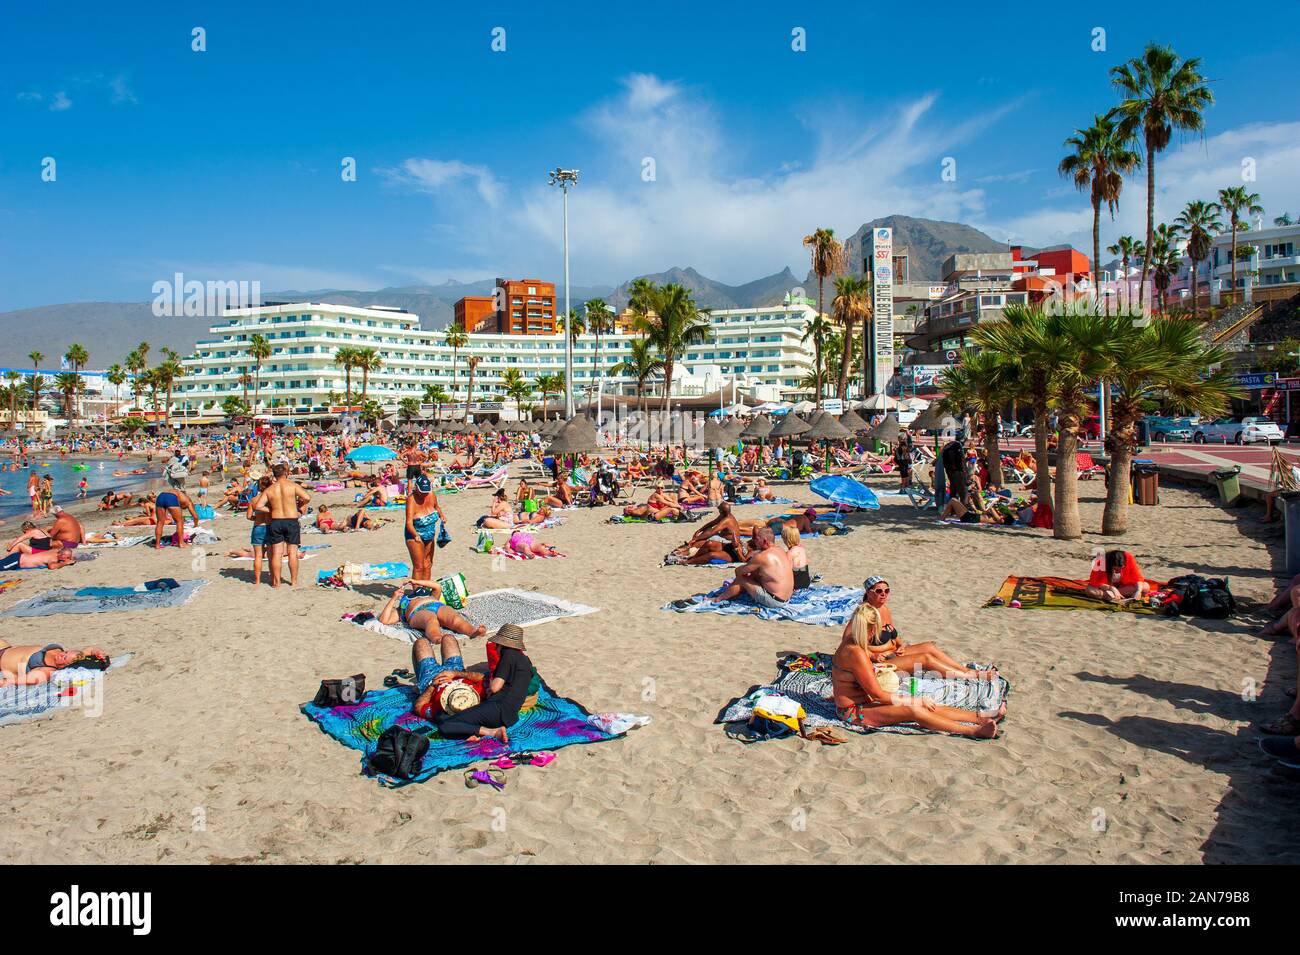 CANARY ISLAND TENERIFE, SPAIN - 26 DEC, 2019: Tourists are relaxing on playa la pinta puerto colon. A very popular beach near the city of San Eugenio. Stock Photo